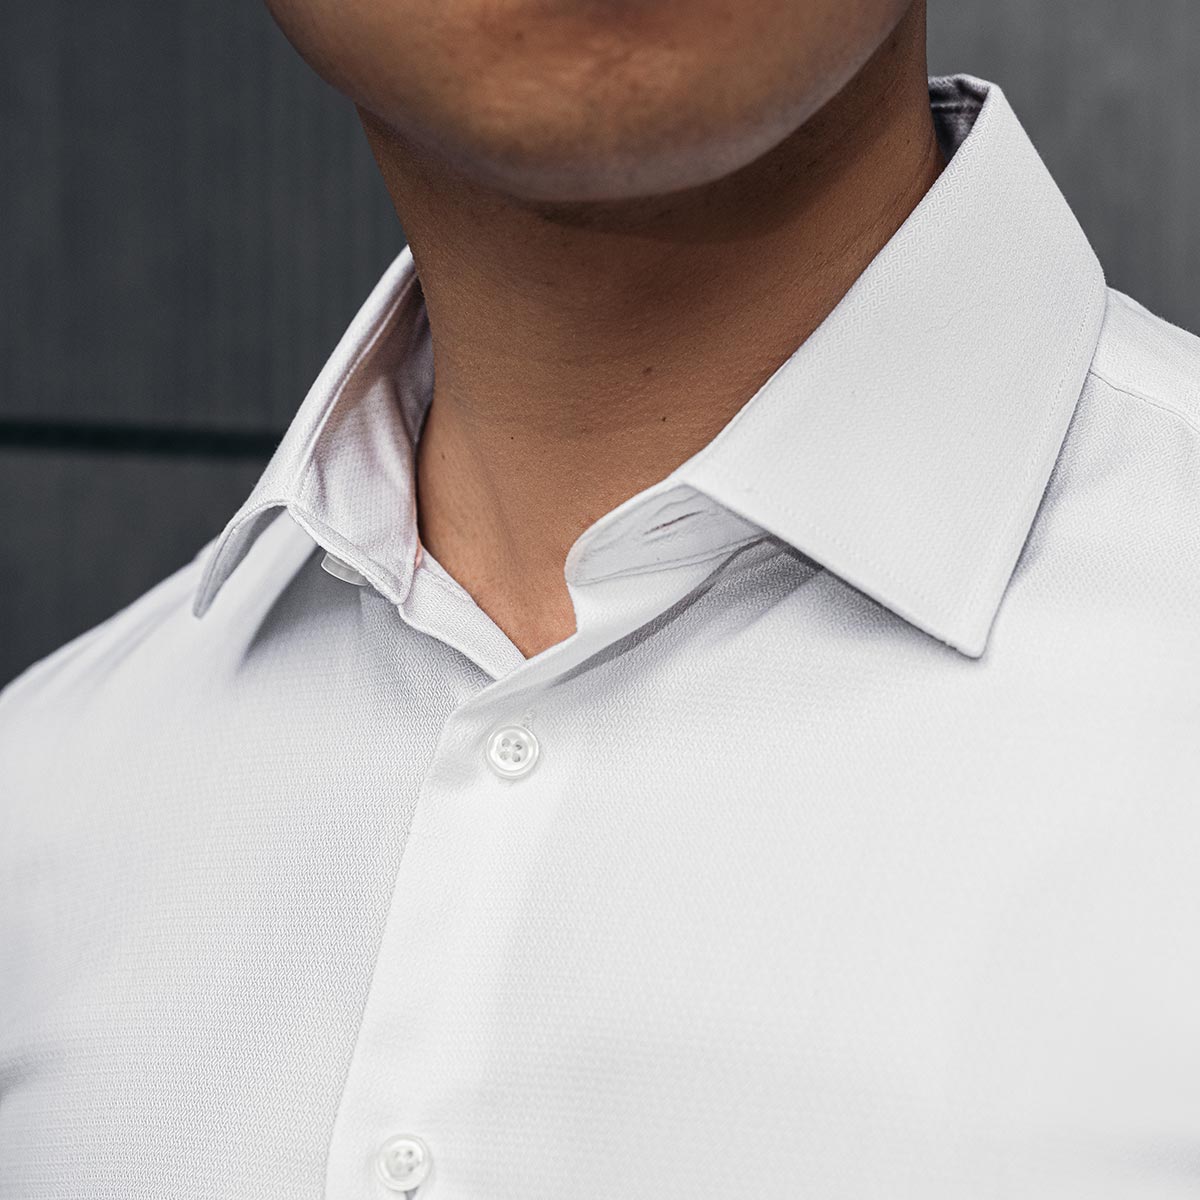 jacquard weave on men's solid white dress shirt for business